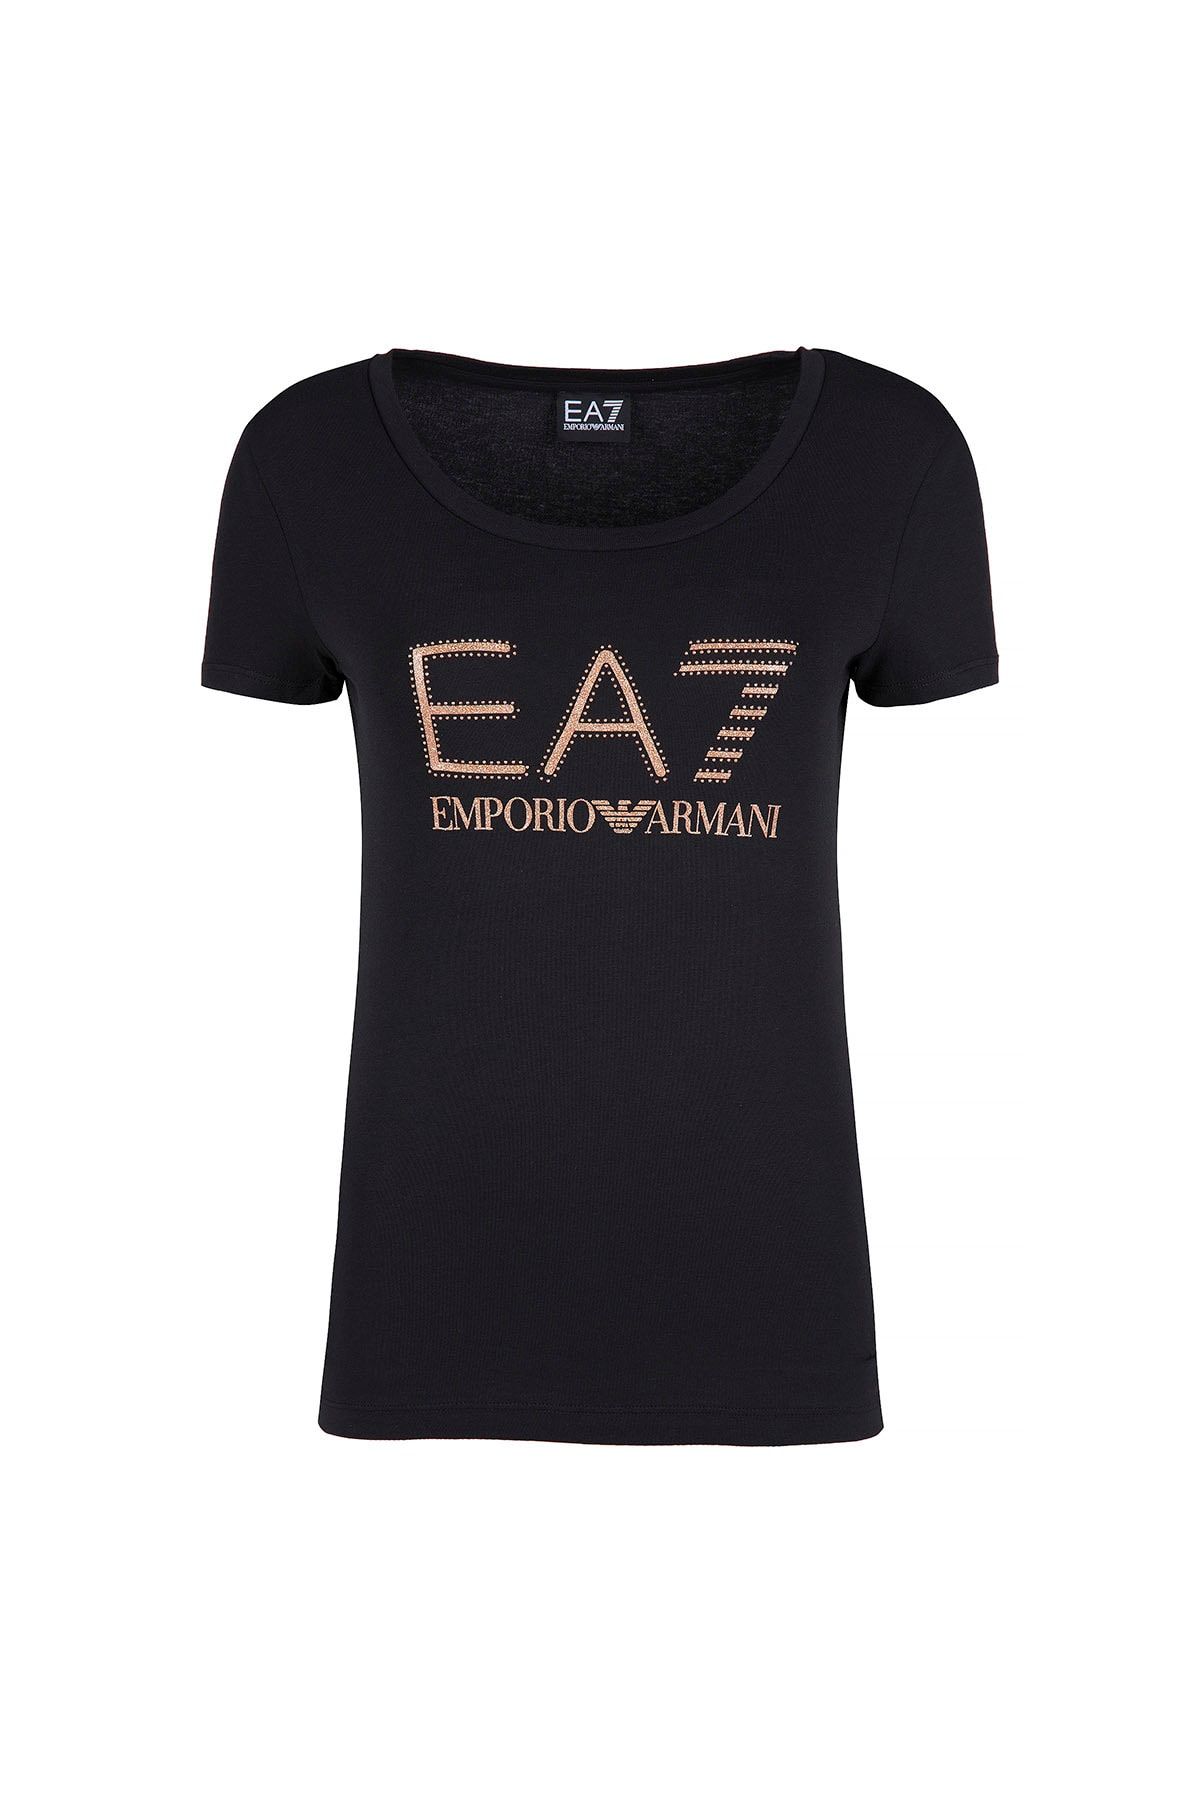 EA7 Siyah Kadın T-Shirt